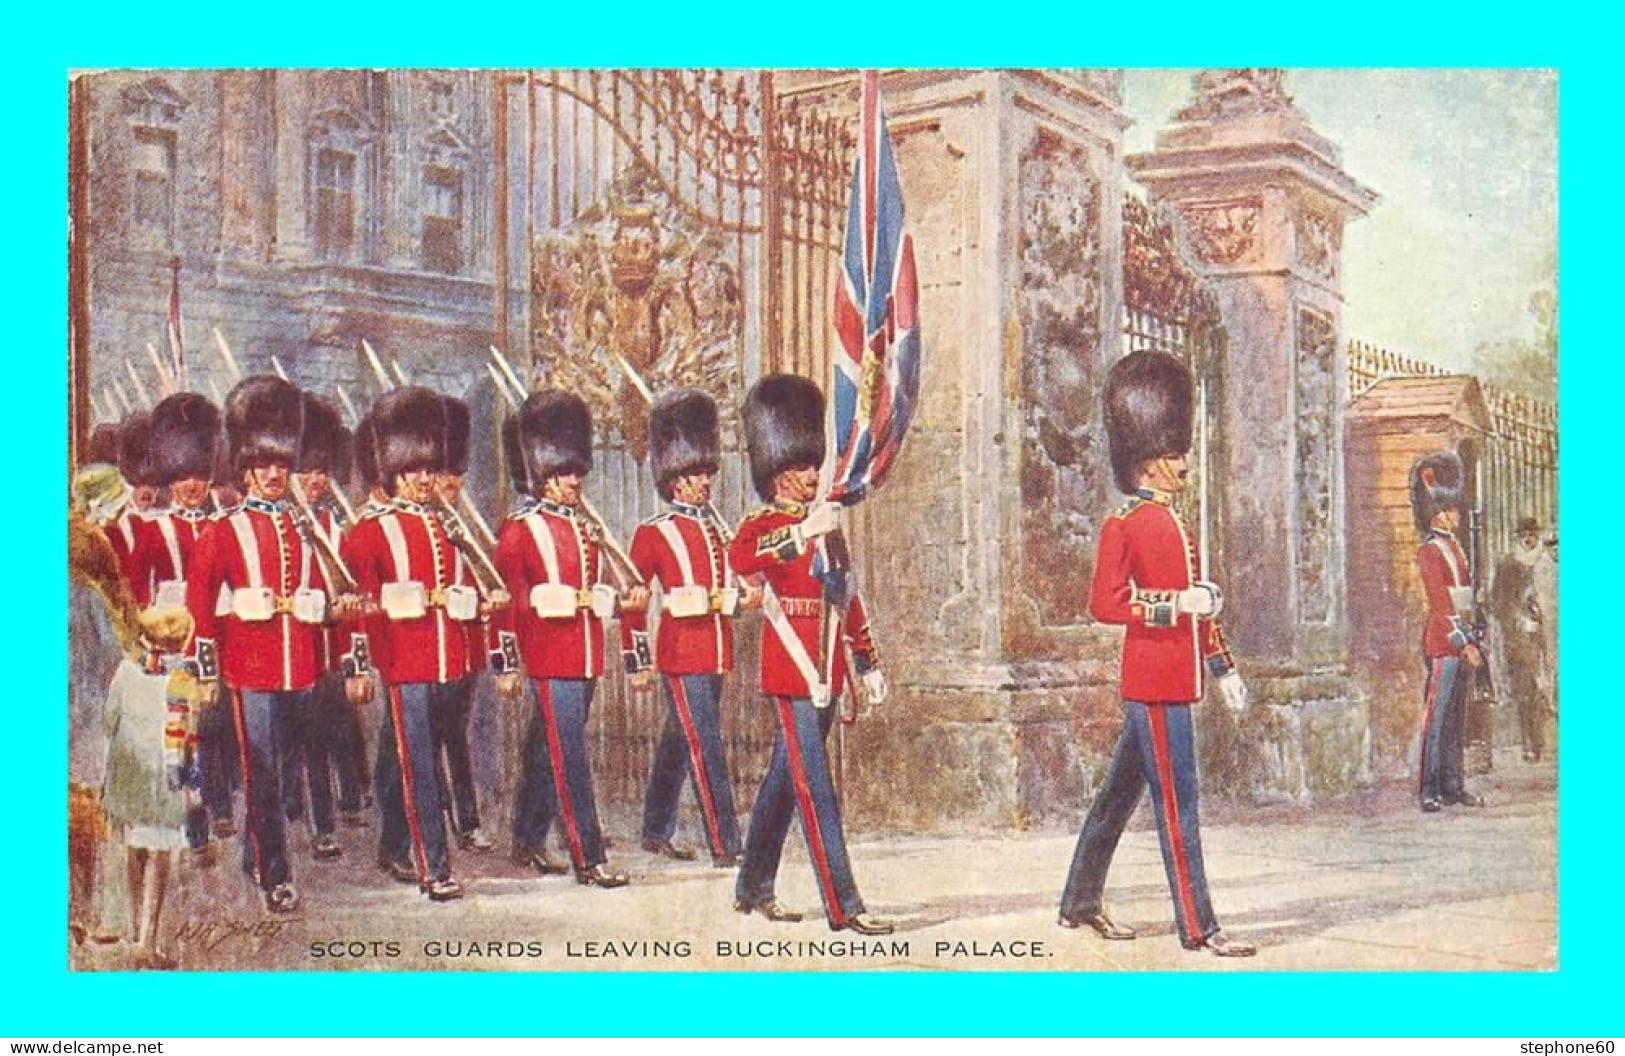 A931 / 215 BUCKINGHAM PALACE Scots Guards Leaving Buckingham Palace - Buckingham Palace